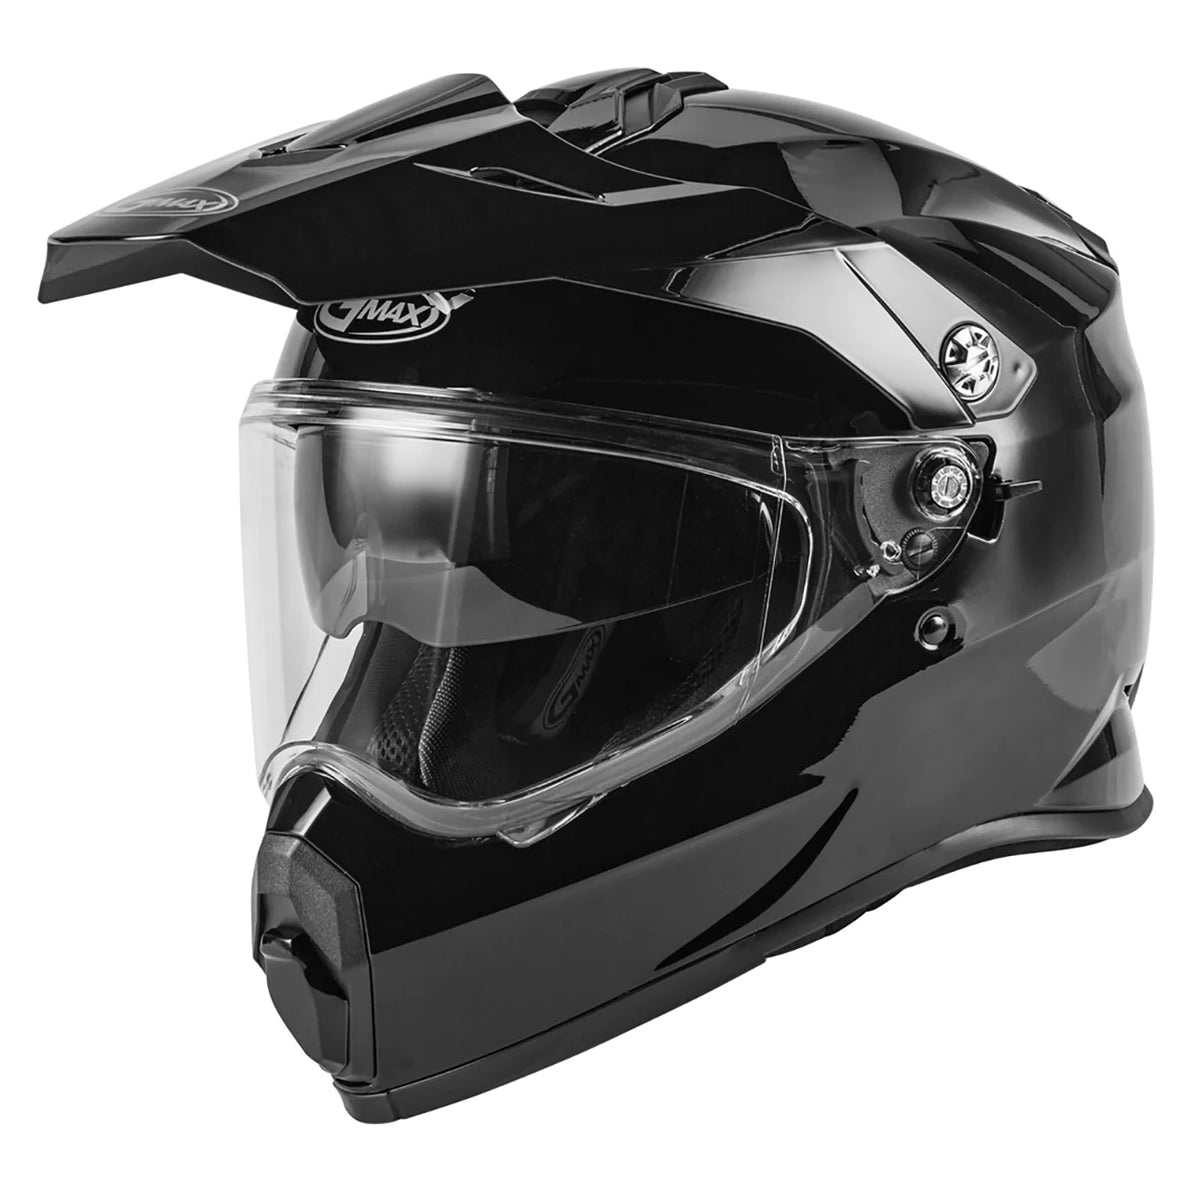 GMAX AT-21 Adventure Adult Off-Road Helmets